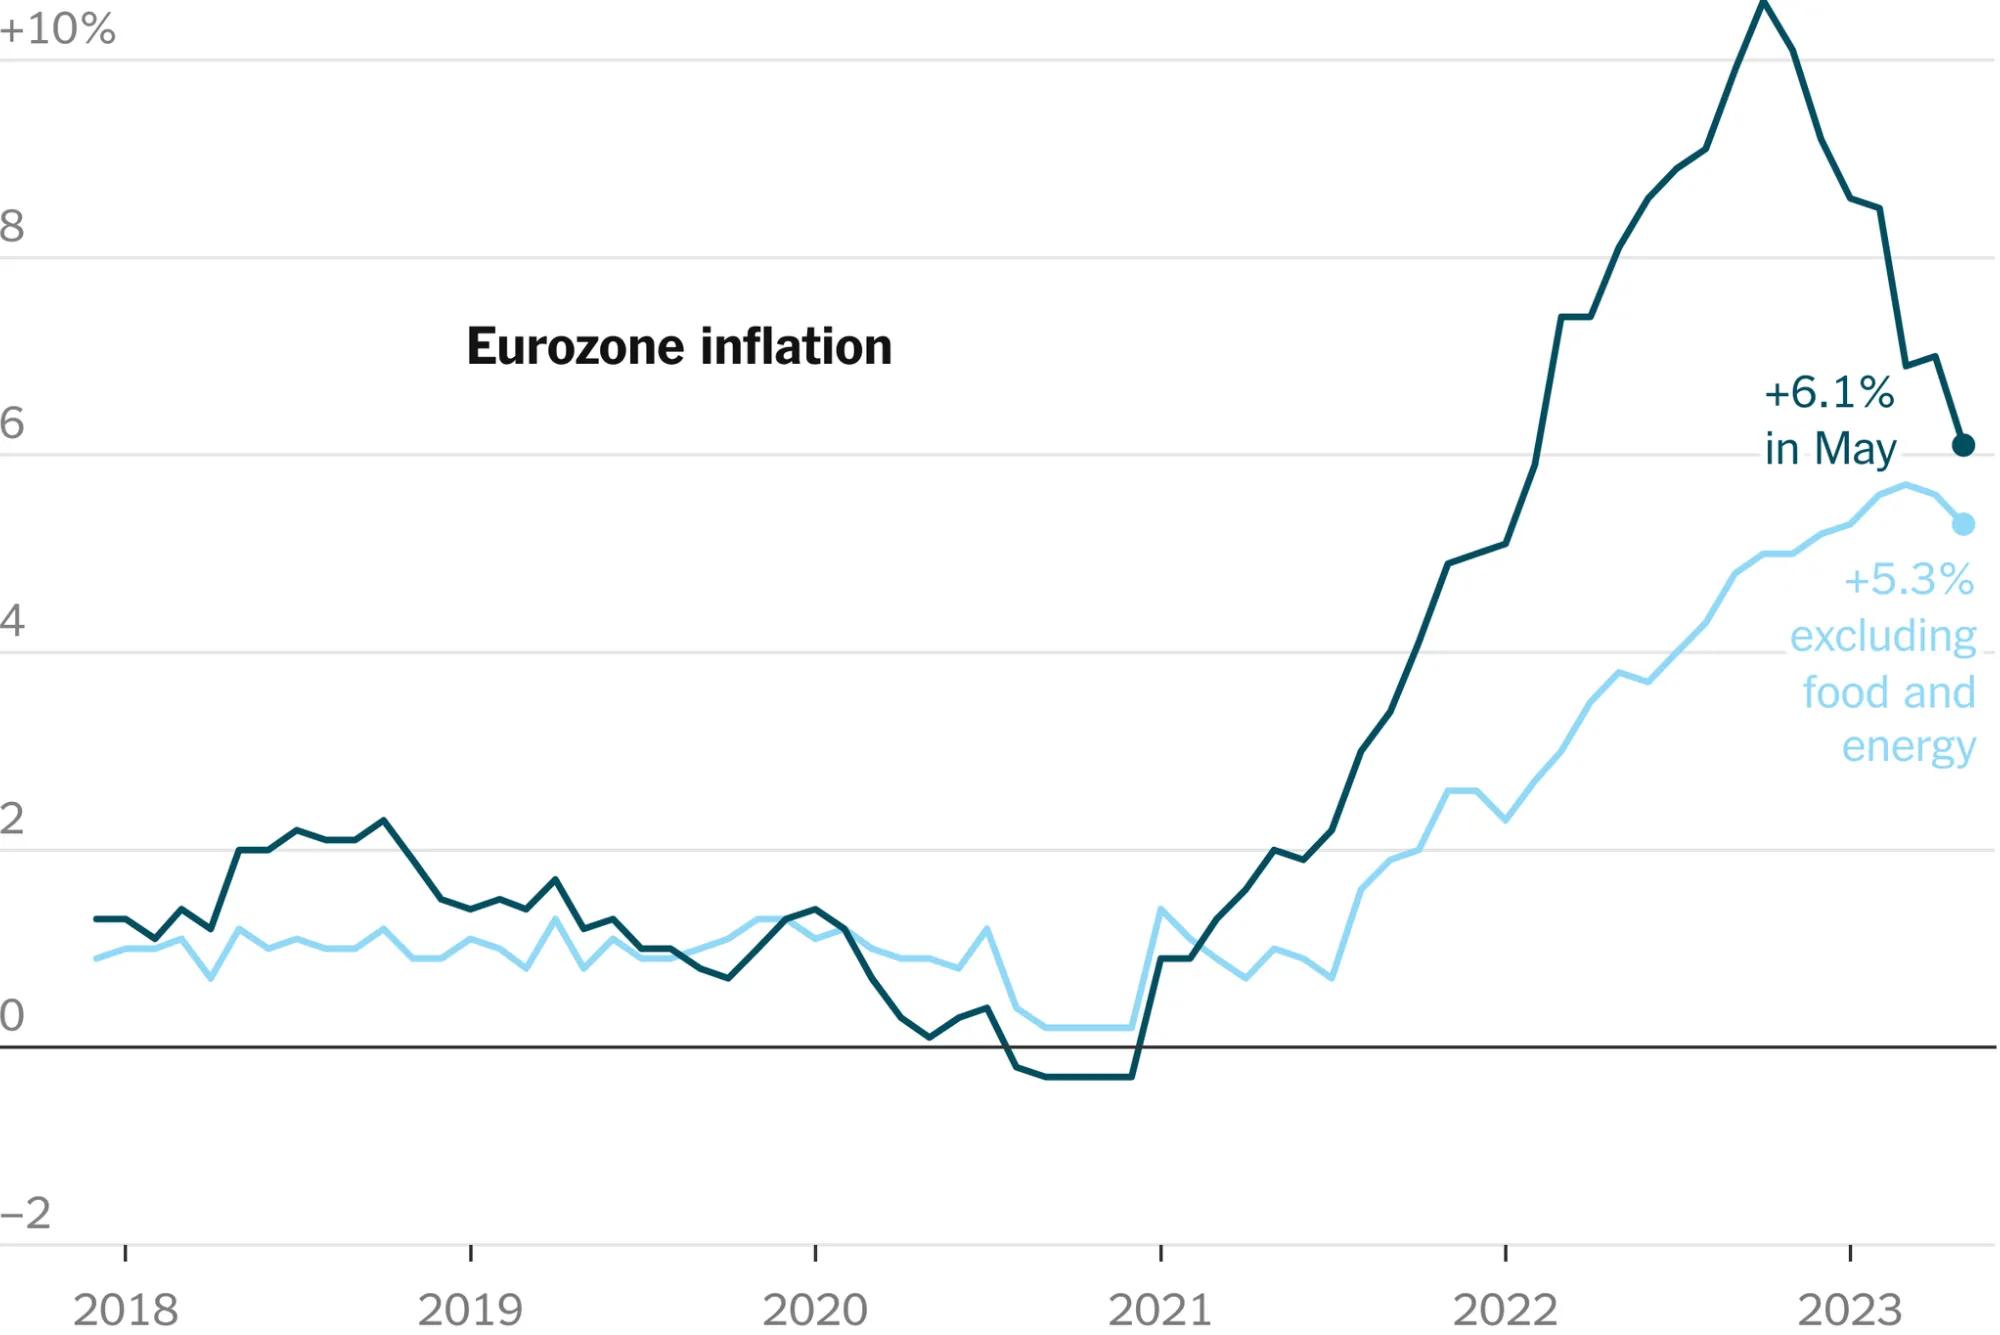 Eurozone GDP Growth